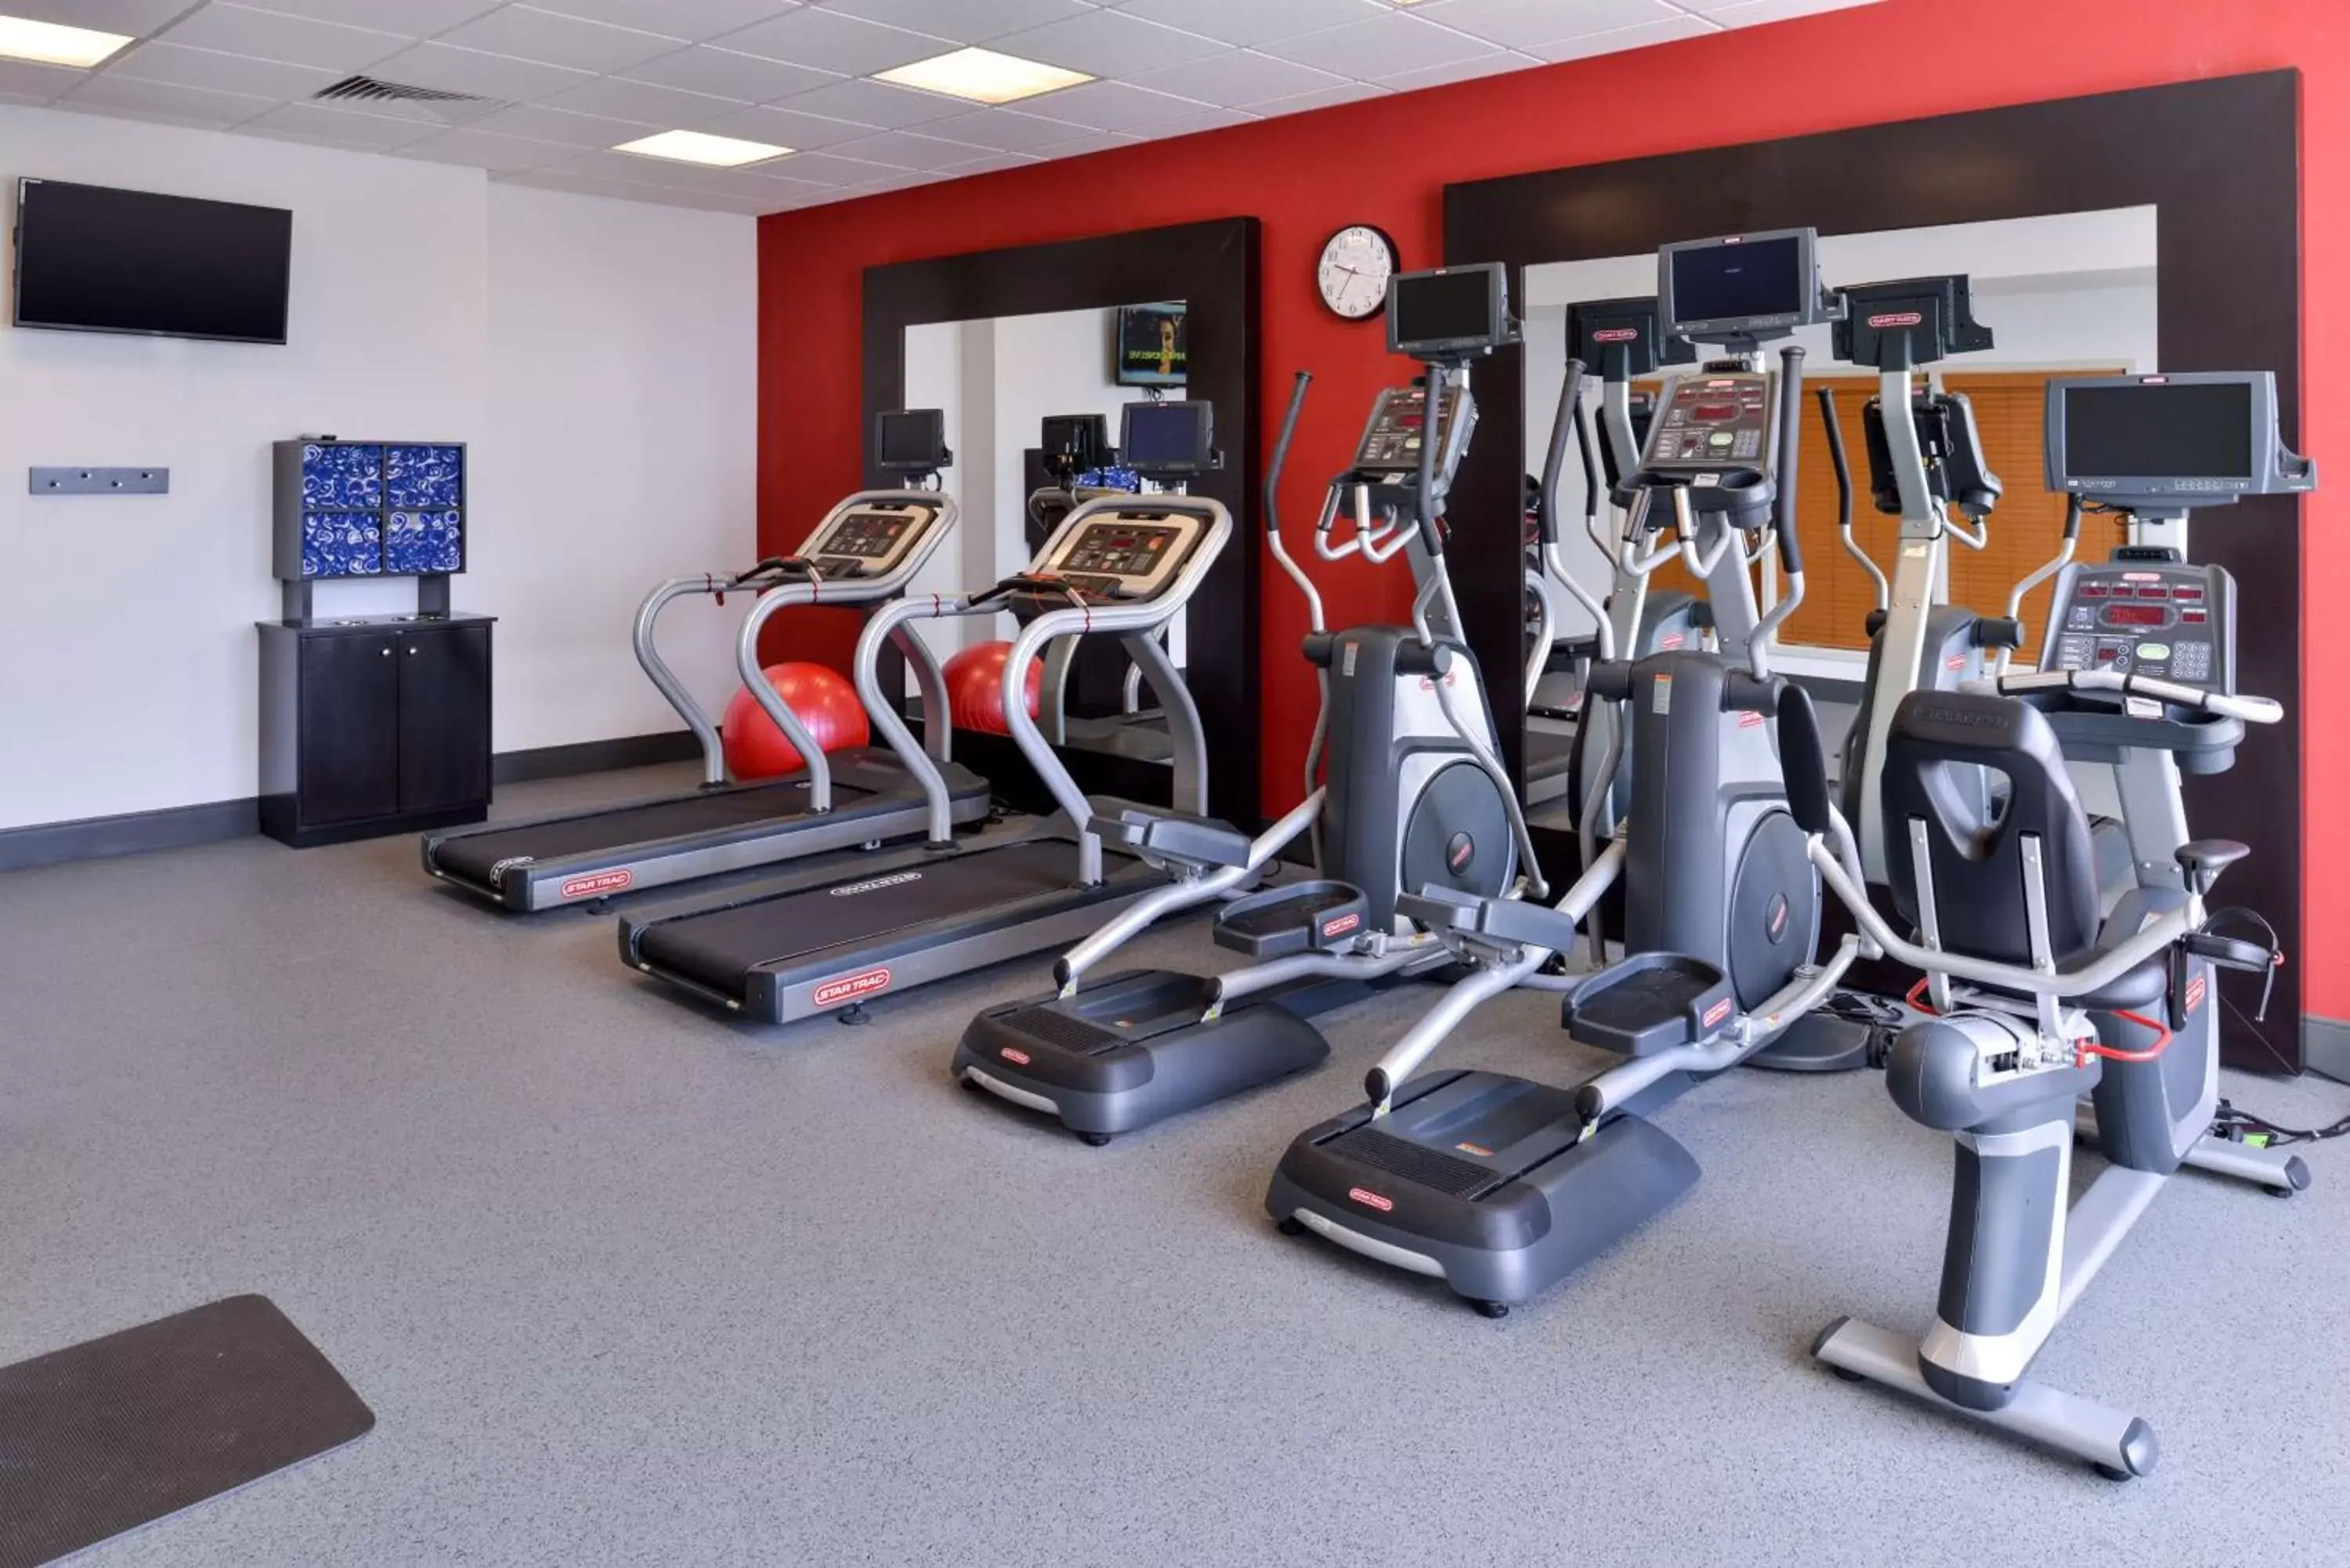 Fitness centre/facilities, Fitness Center/Facilities in Hilton Garden Inn Hobbs